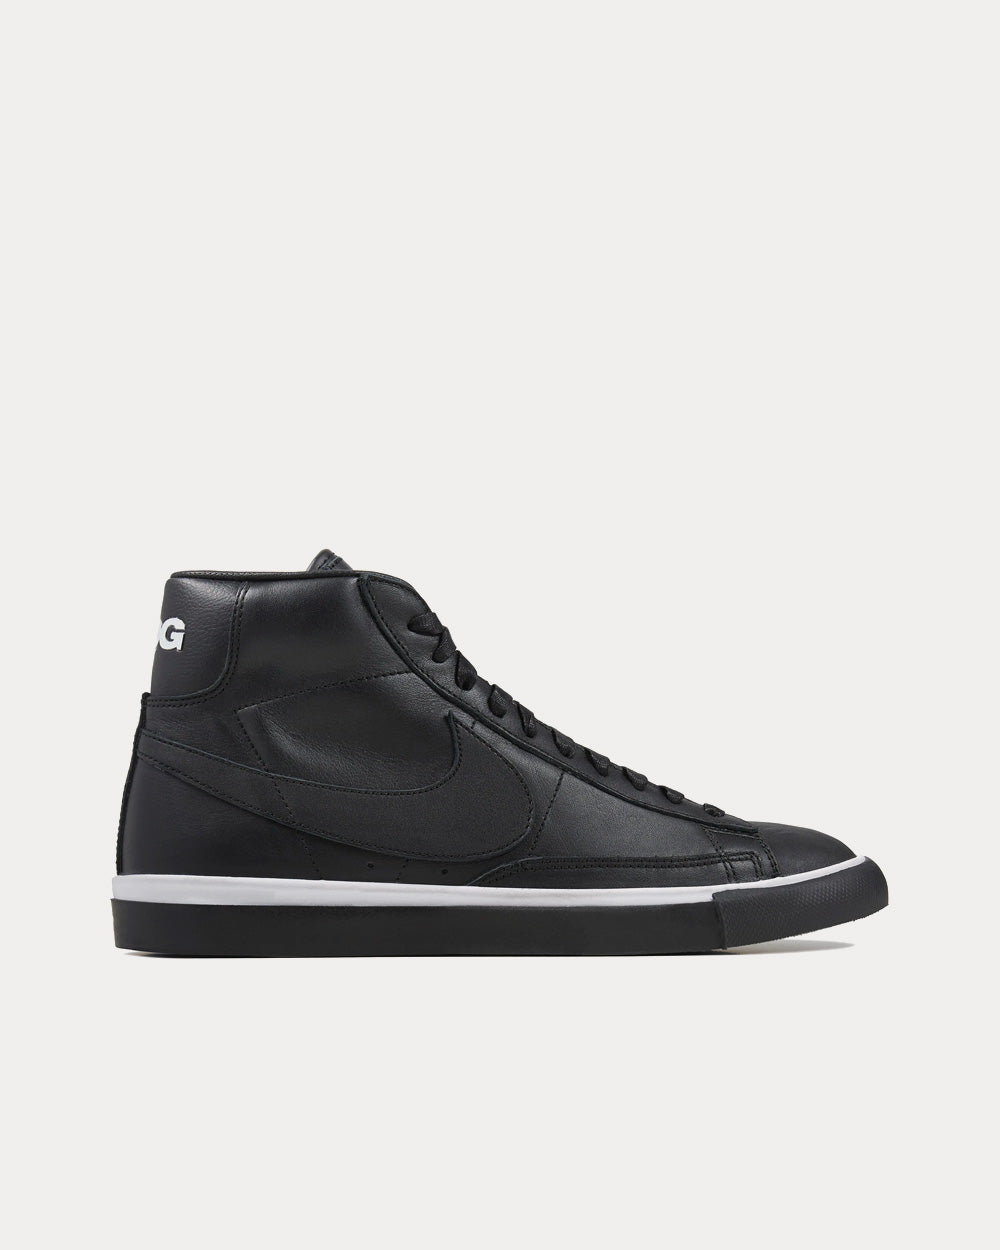 Nike x Comme des Garçons - Blazer Black High Top Sneakers